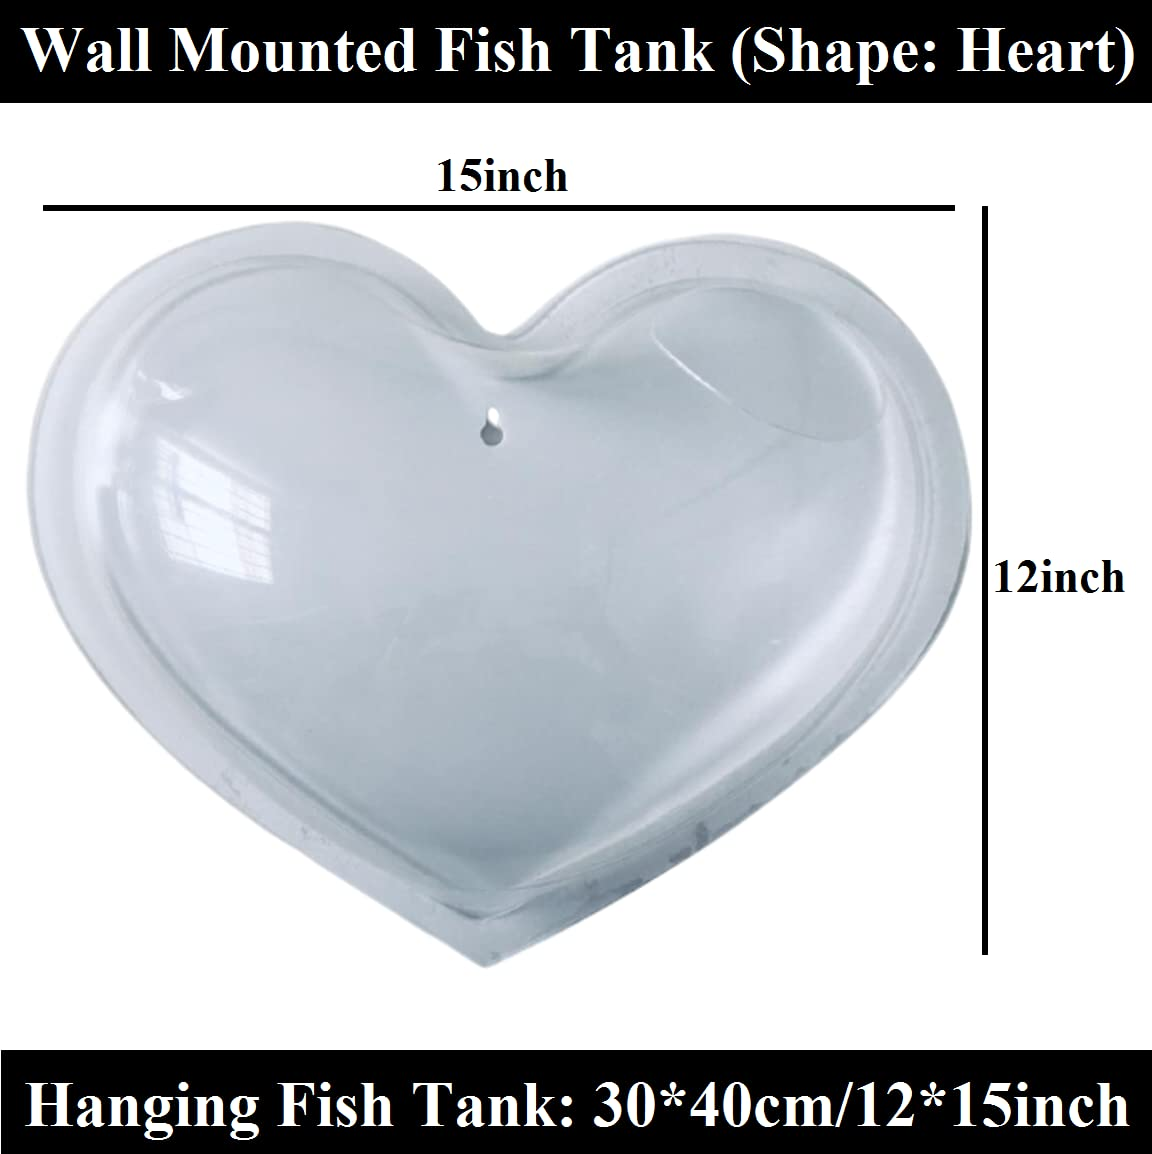 Despacito Wall Mounted Fish Tank for Home, Hanging Fish Tank Aquarium, Aquarium Wall Plant Pot Decoration Planter (Size: 12 x 15inch)(Heart-White)